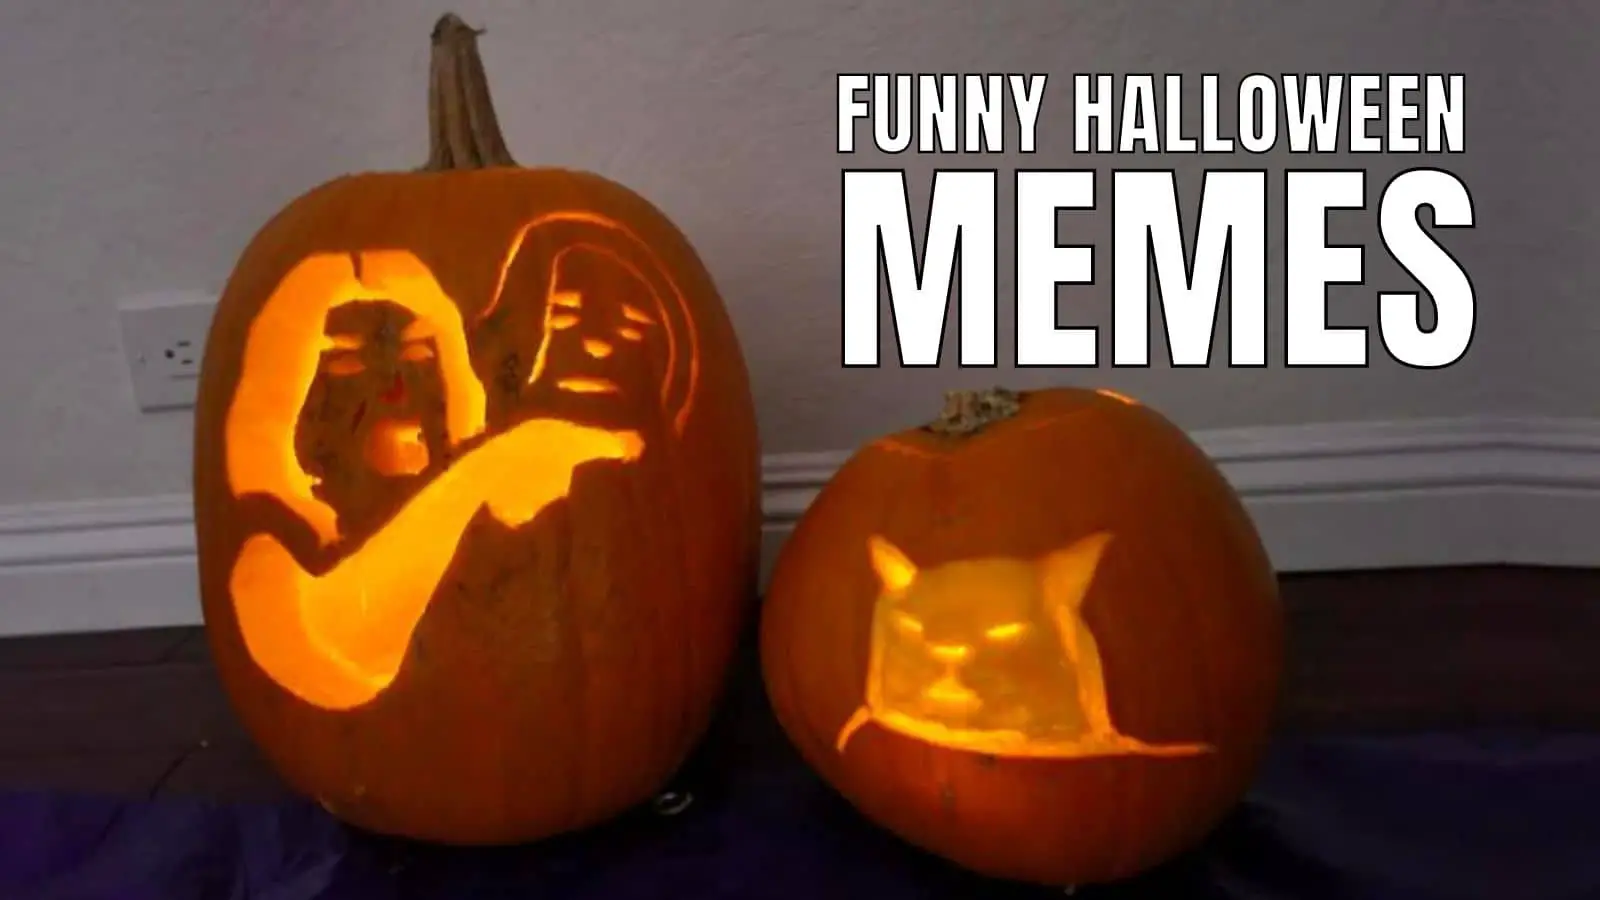 Funny Halloween Memes on Pumpkin Carving